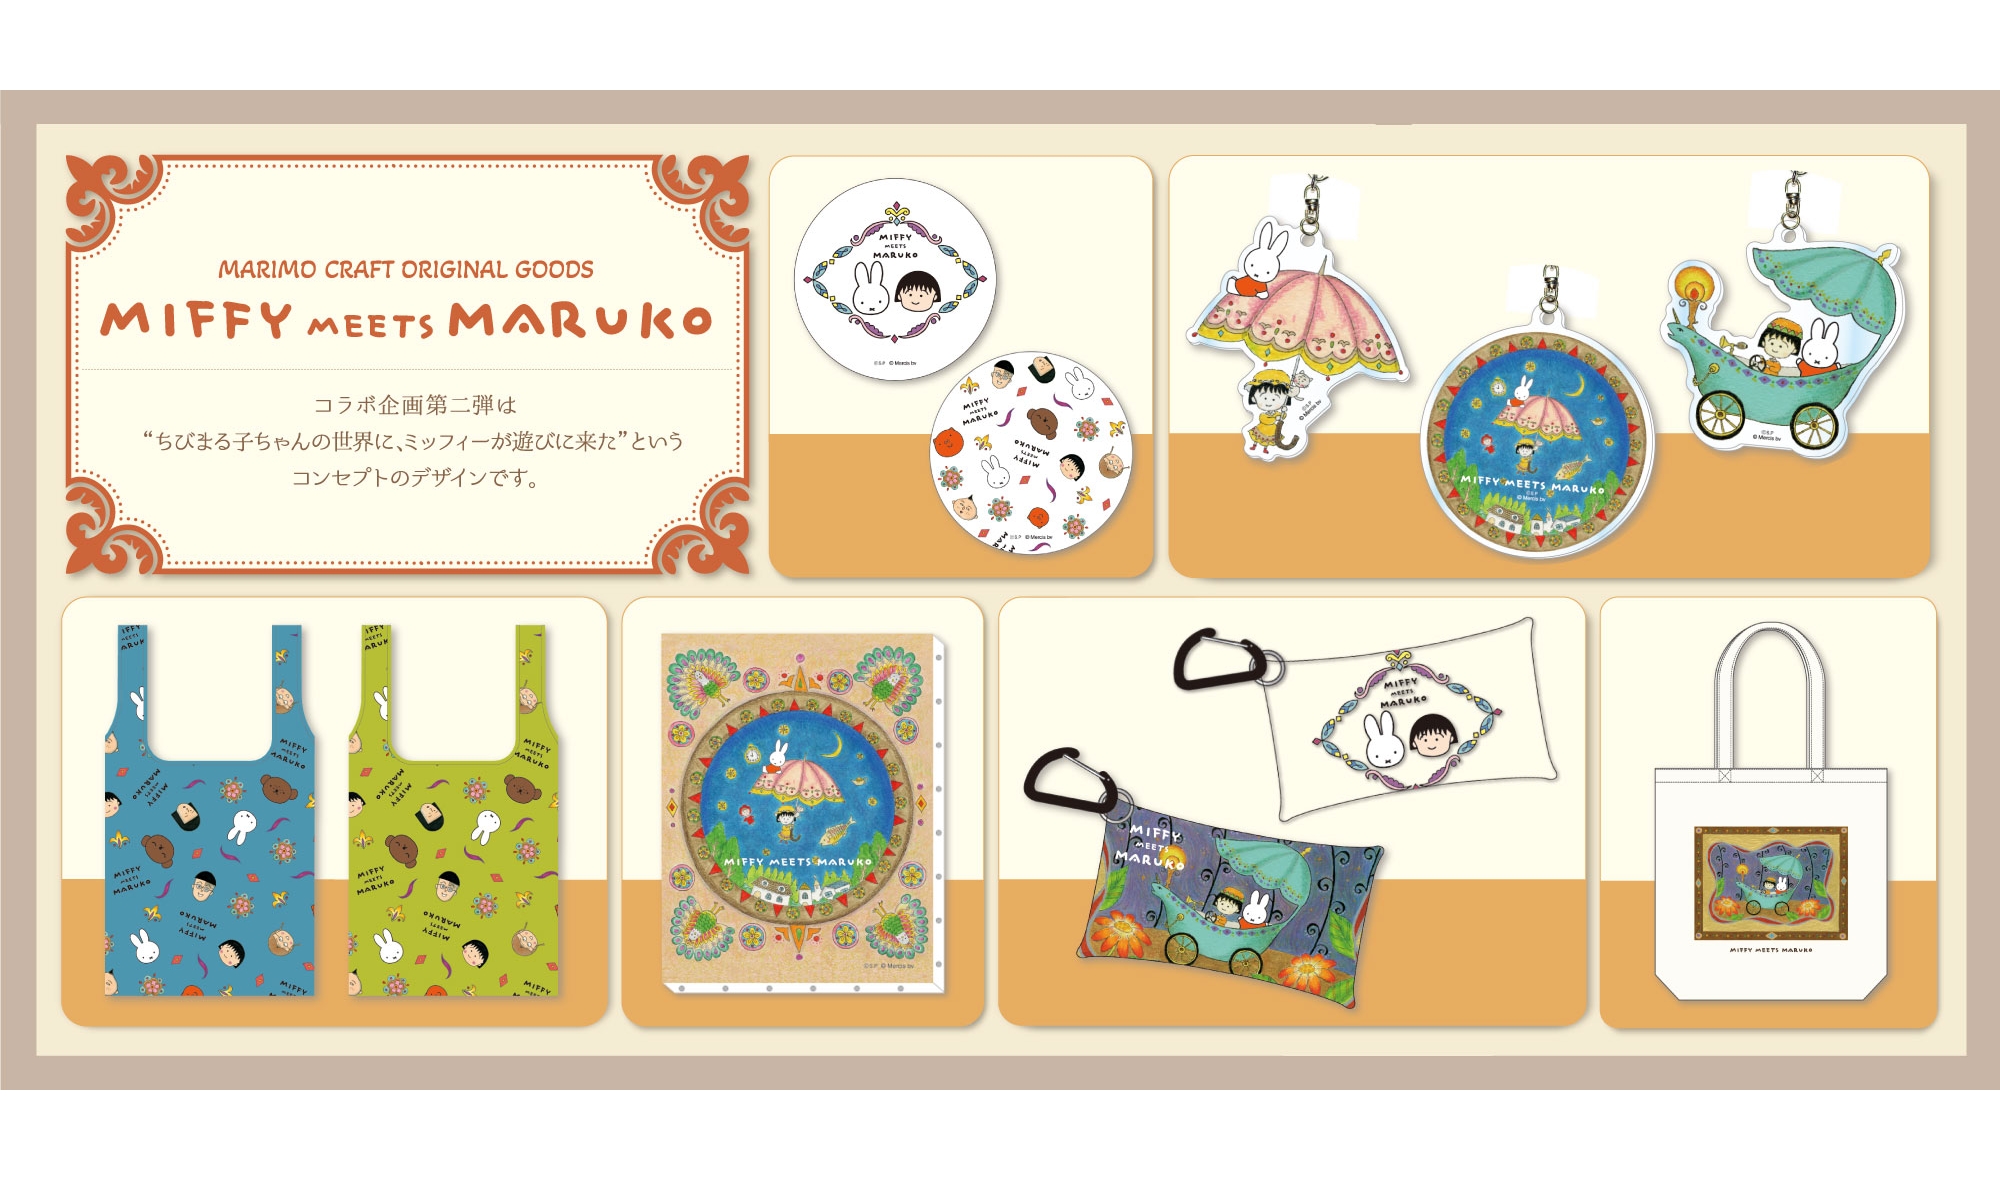 miffy-meets-maruko1-3